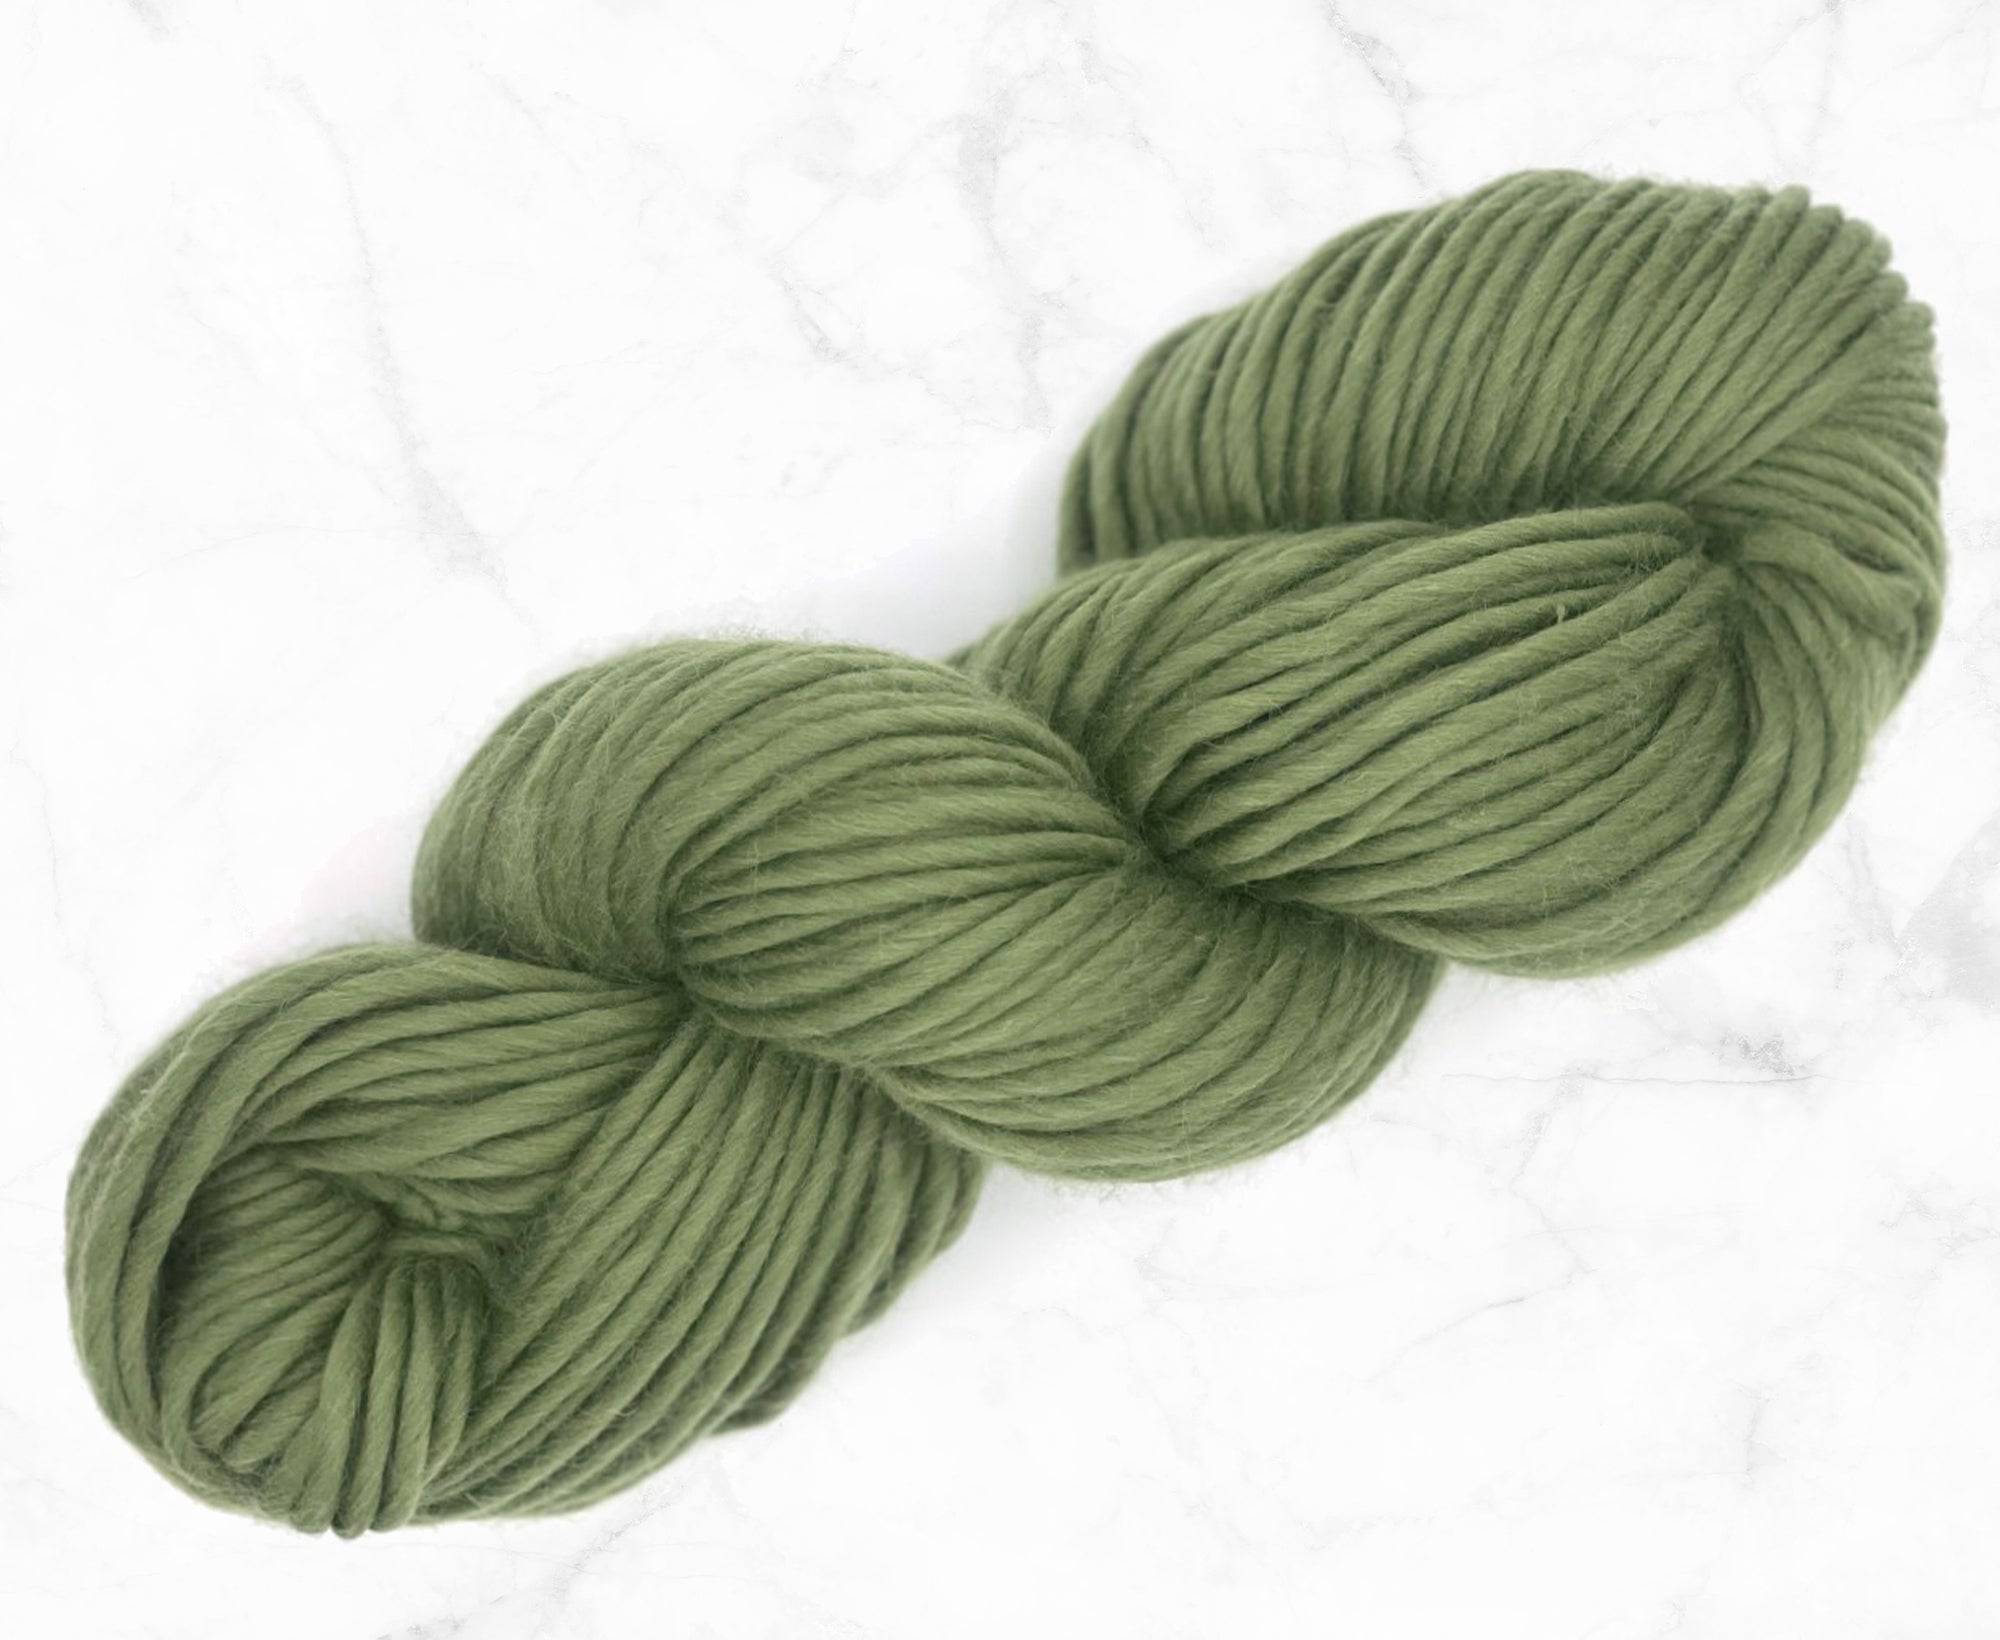 Olive Merino Super Chunky Weight - World of Wool